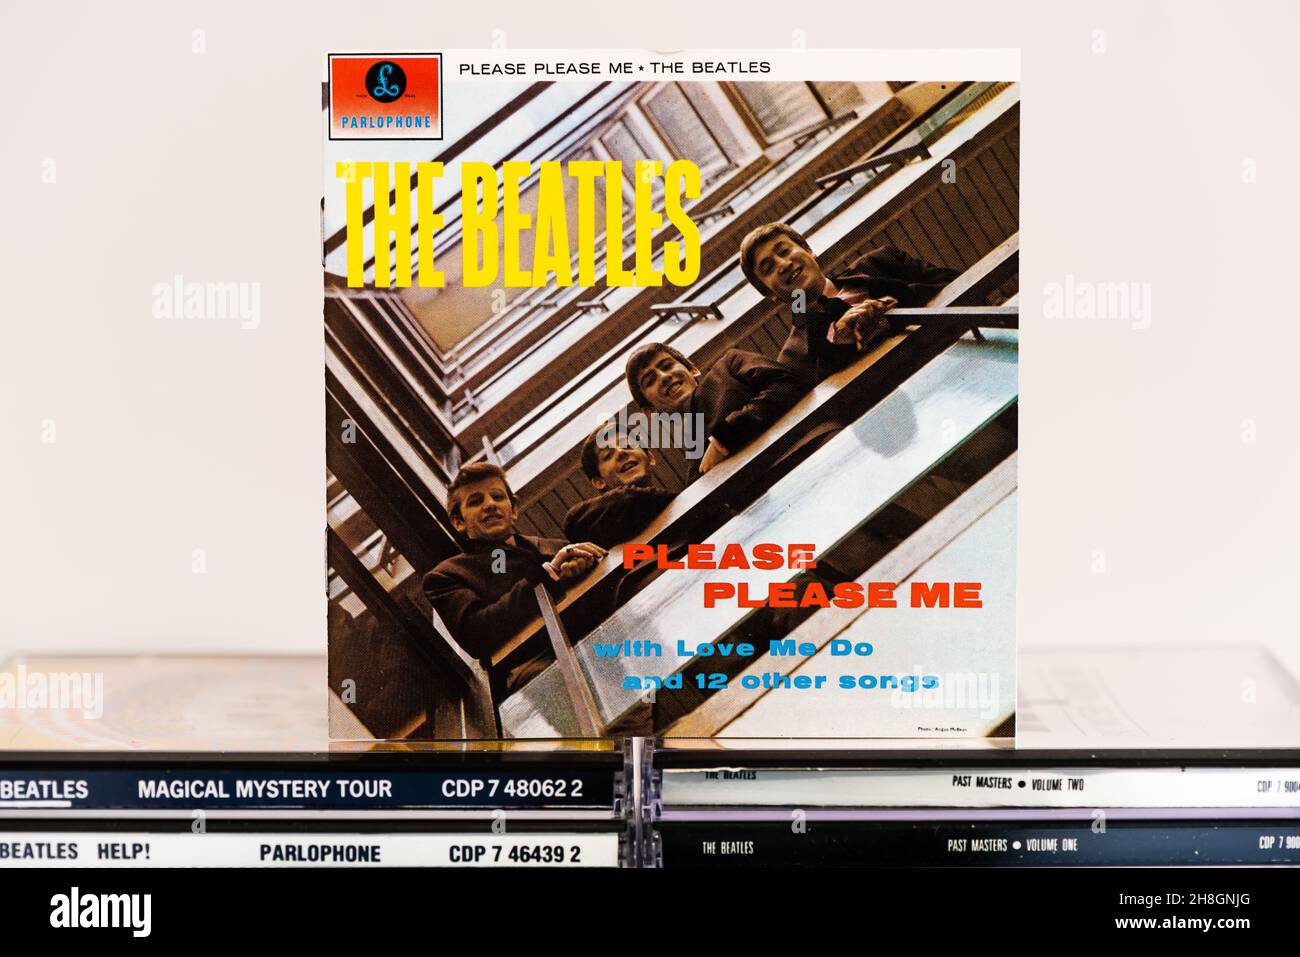 EMI CD  Inlay - The Beatles - Please Please Me. Stock Photo